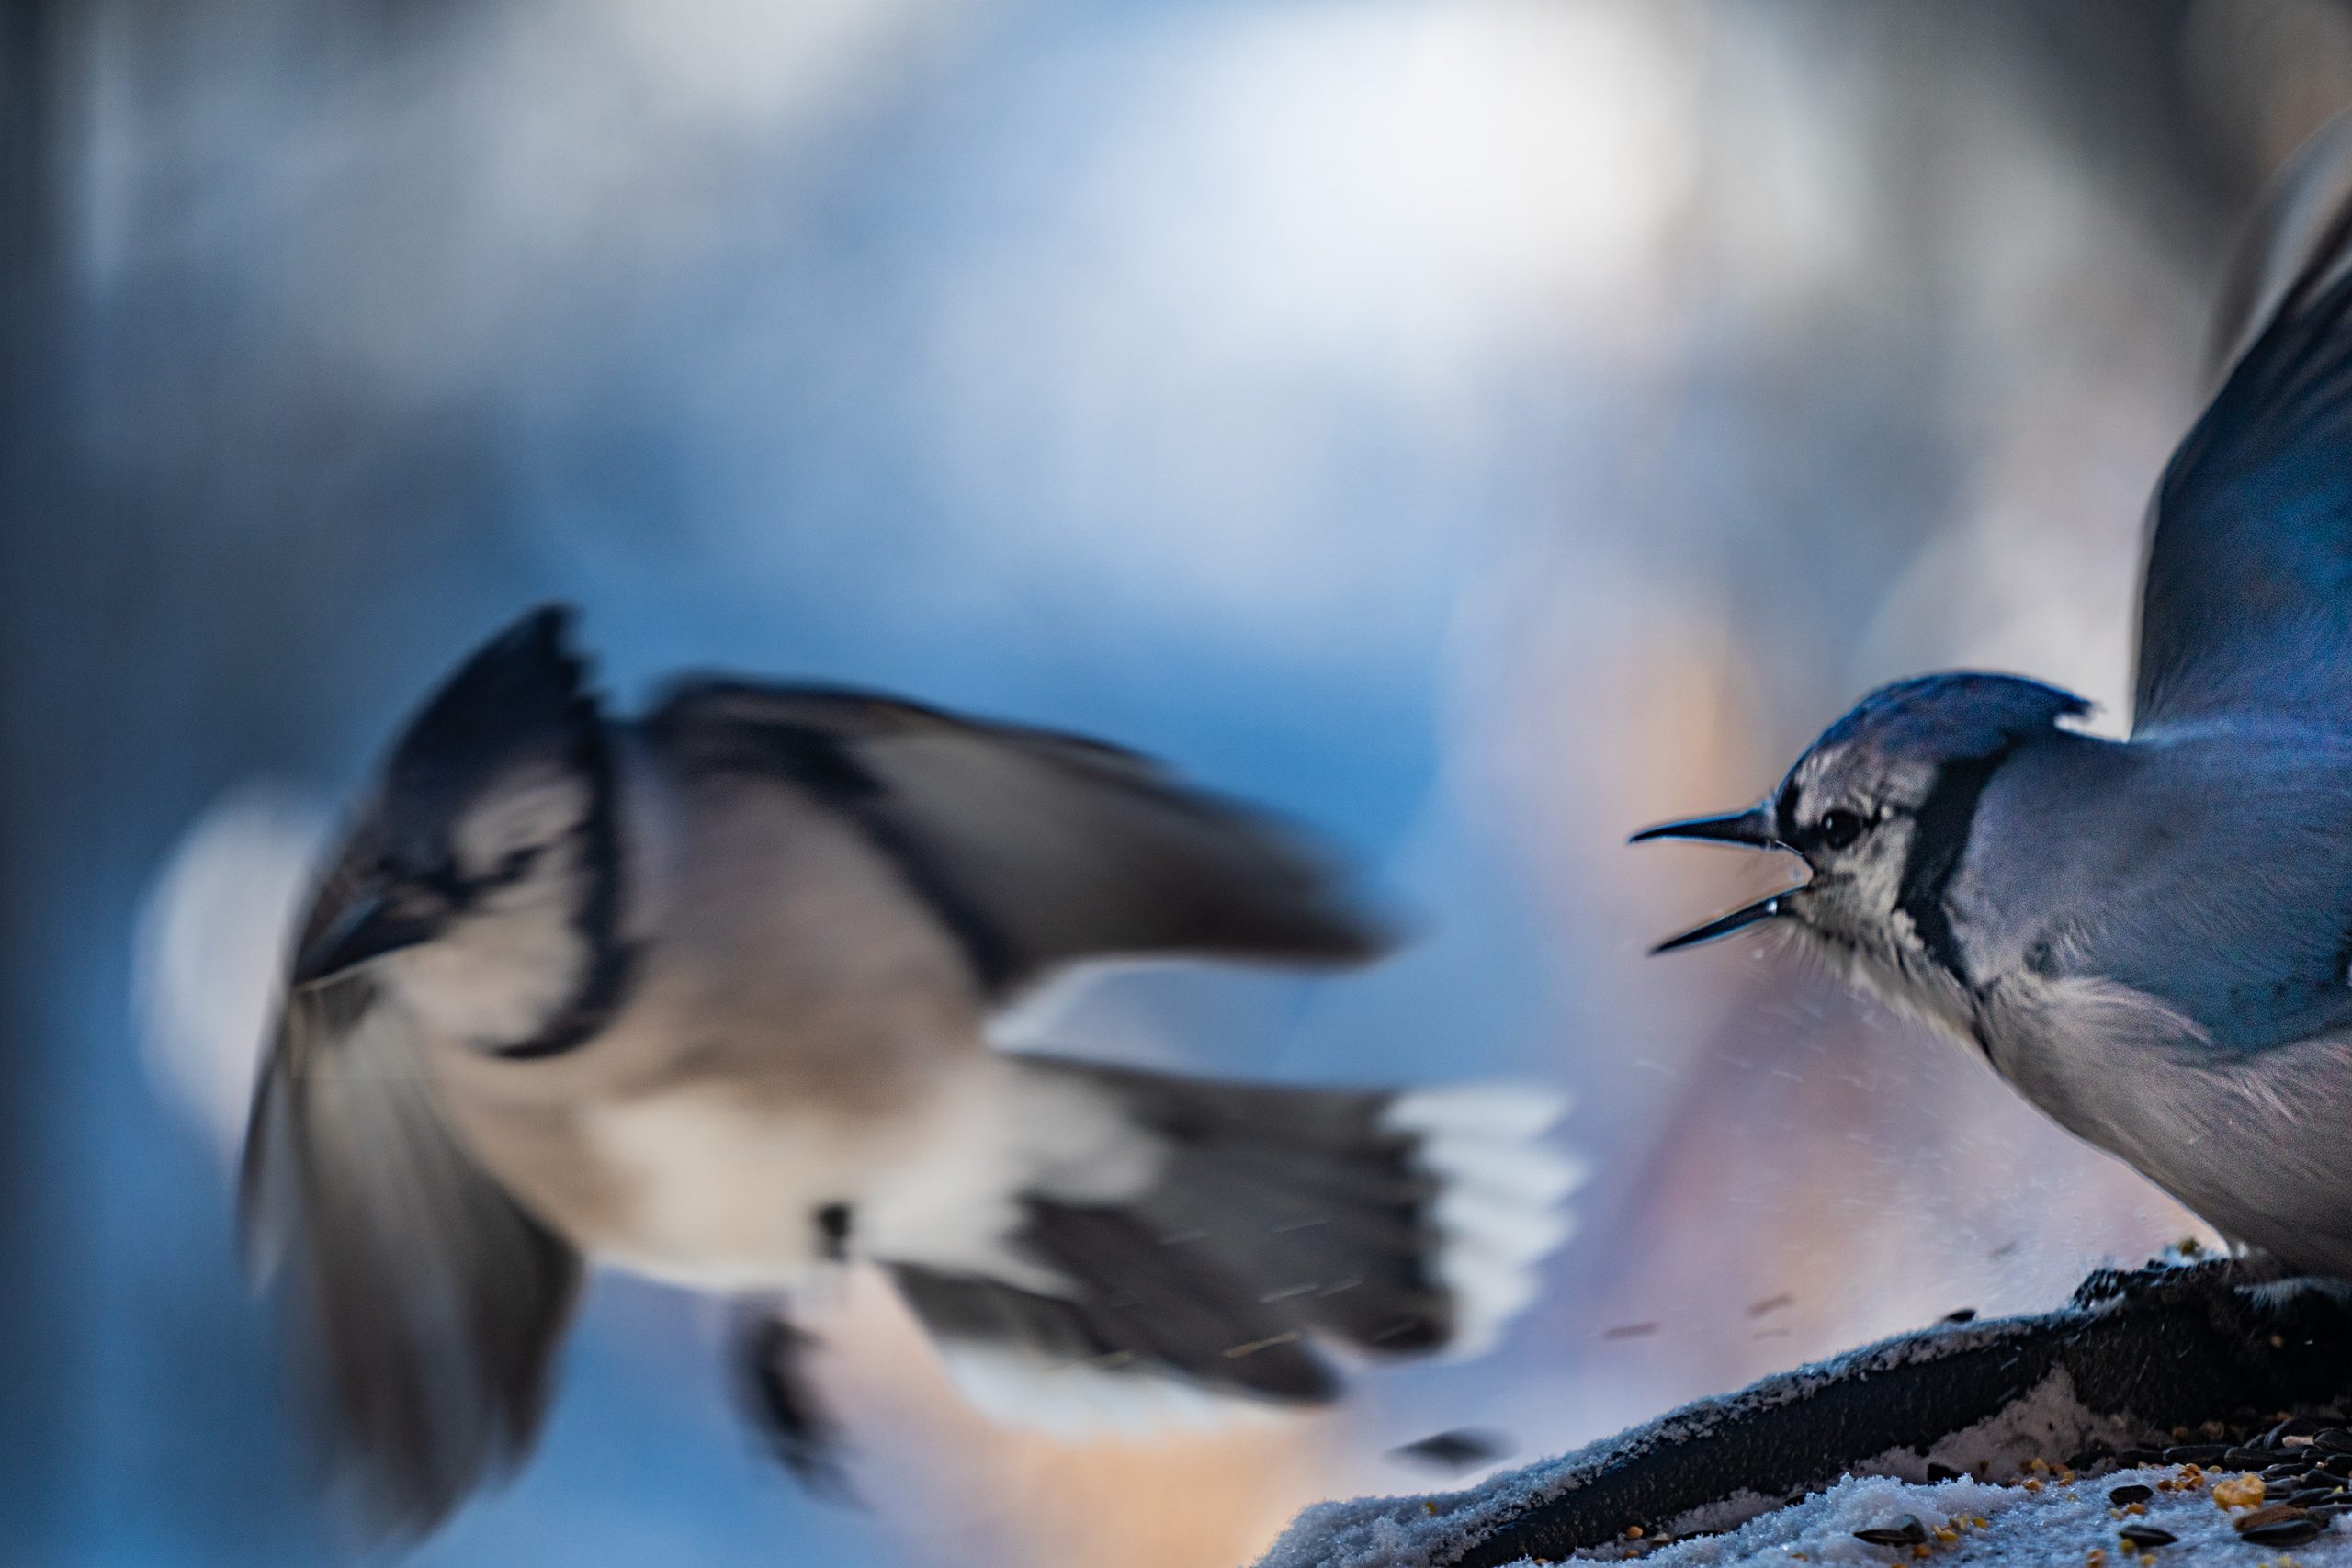 Blue Jays at a backyard feeder in winter